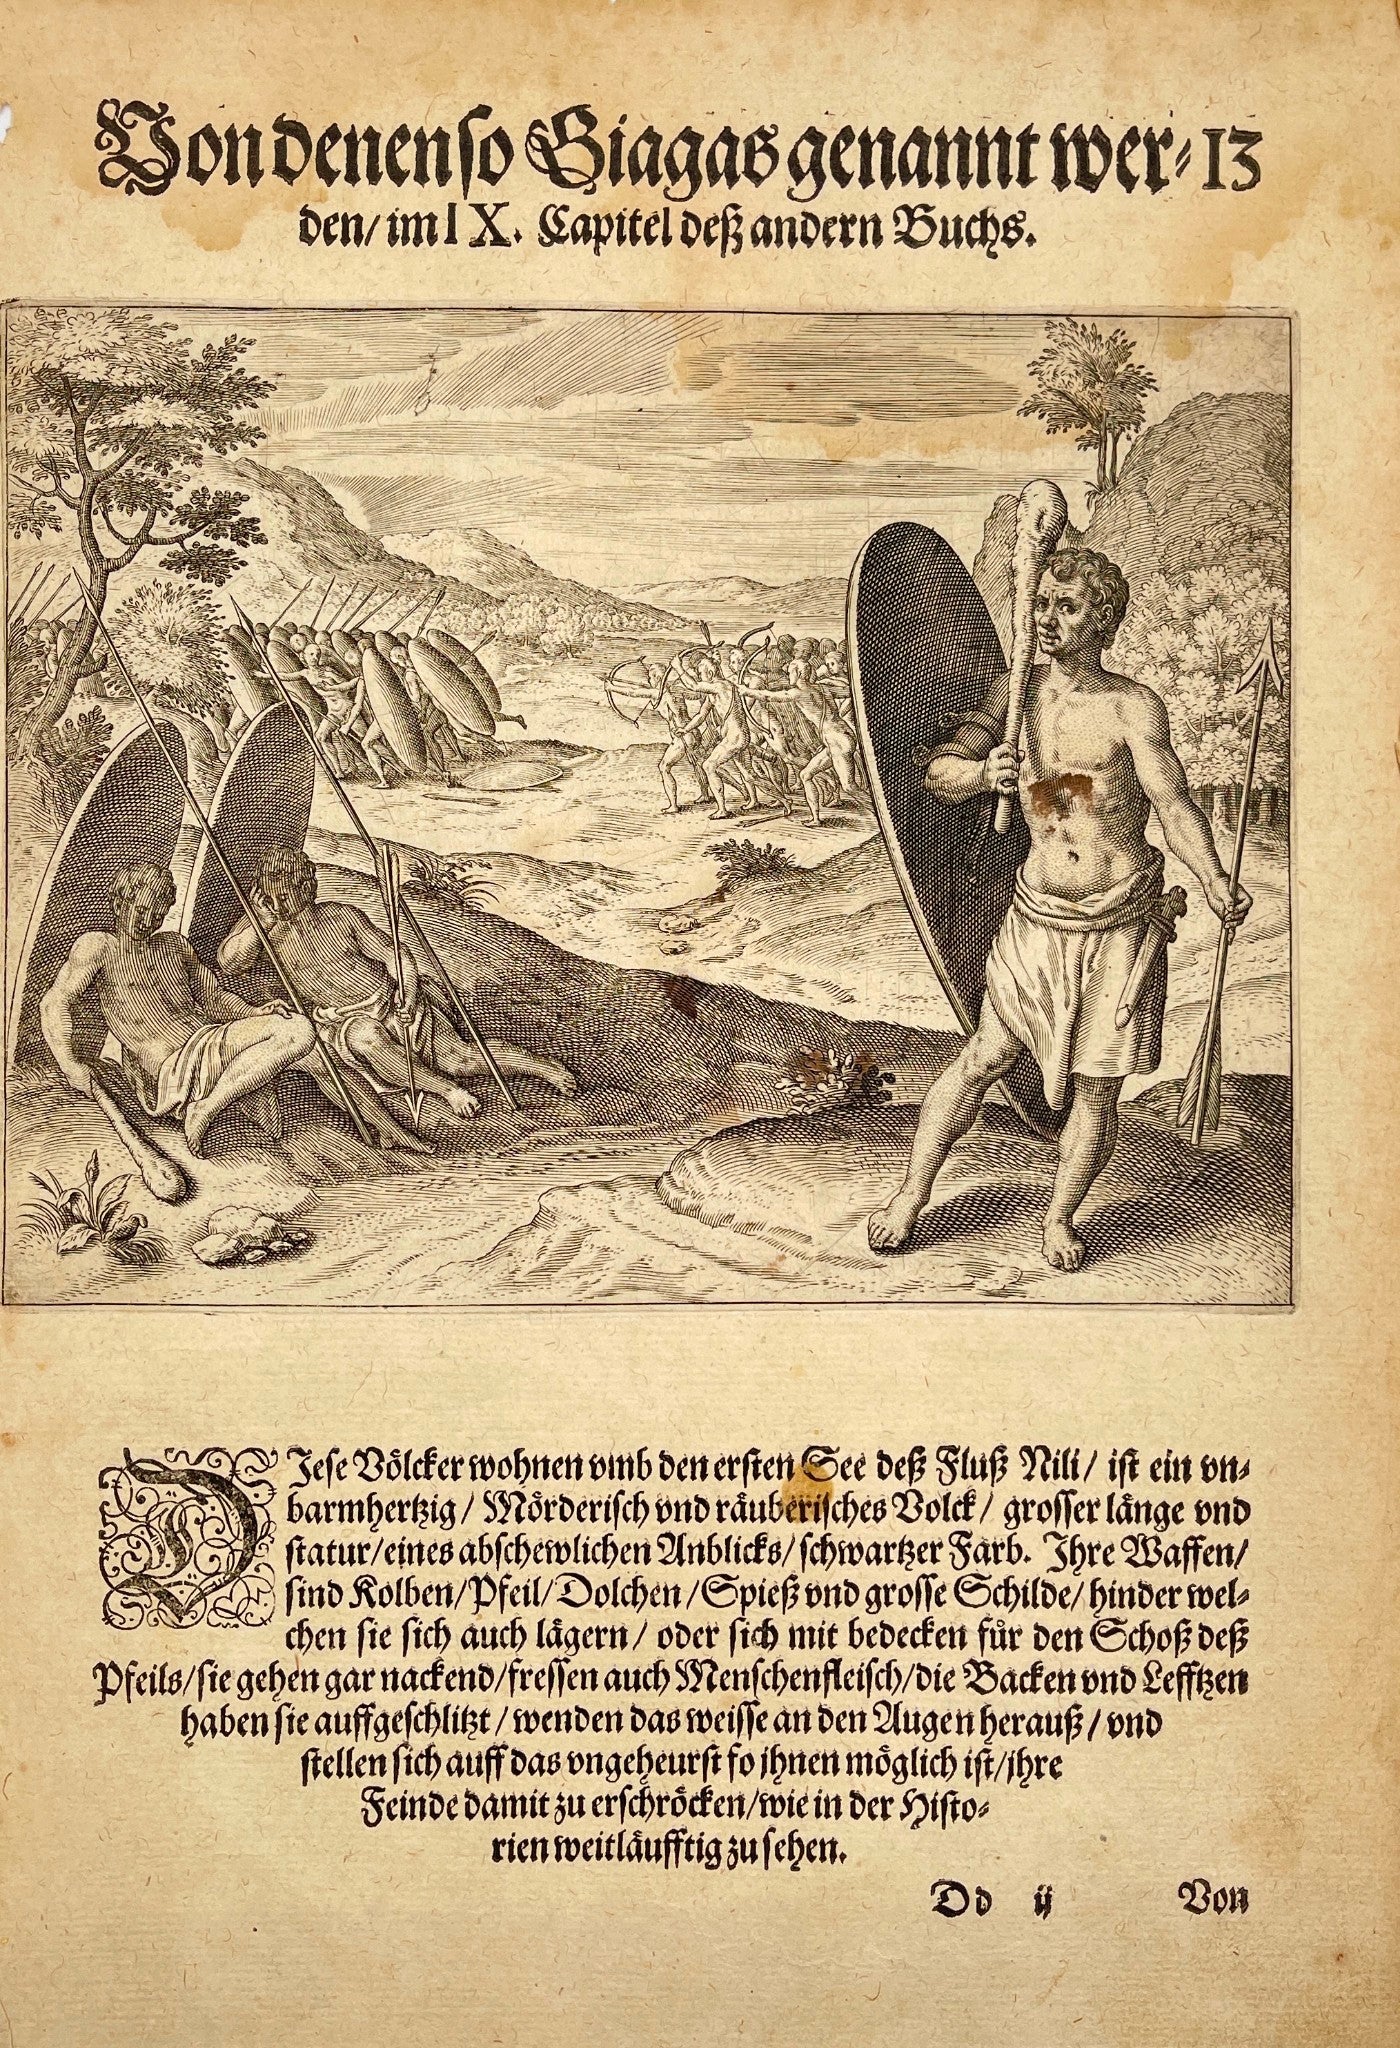 Antique Print - Theodor de Bry - "Reg Congo 13" - Kingdom of Congo in Africa - Dahlströms Fine Art